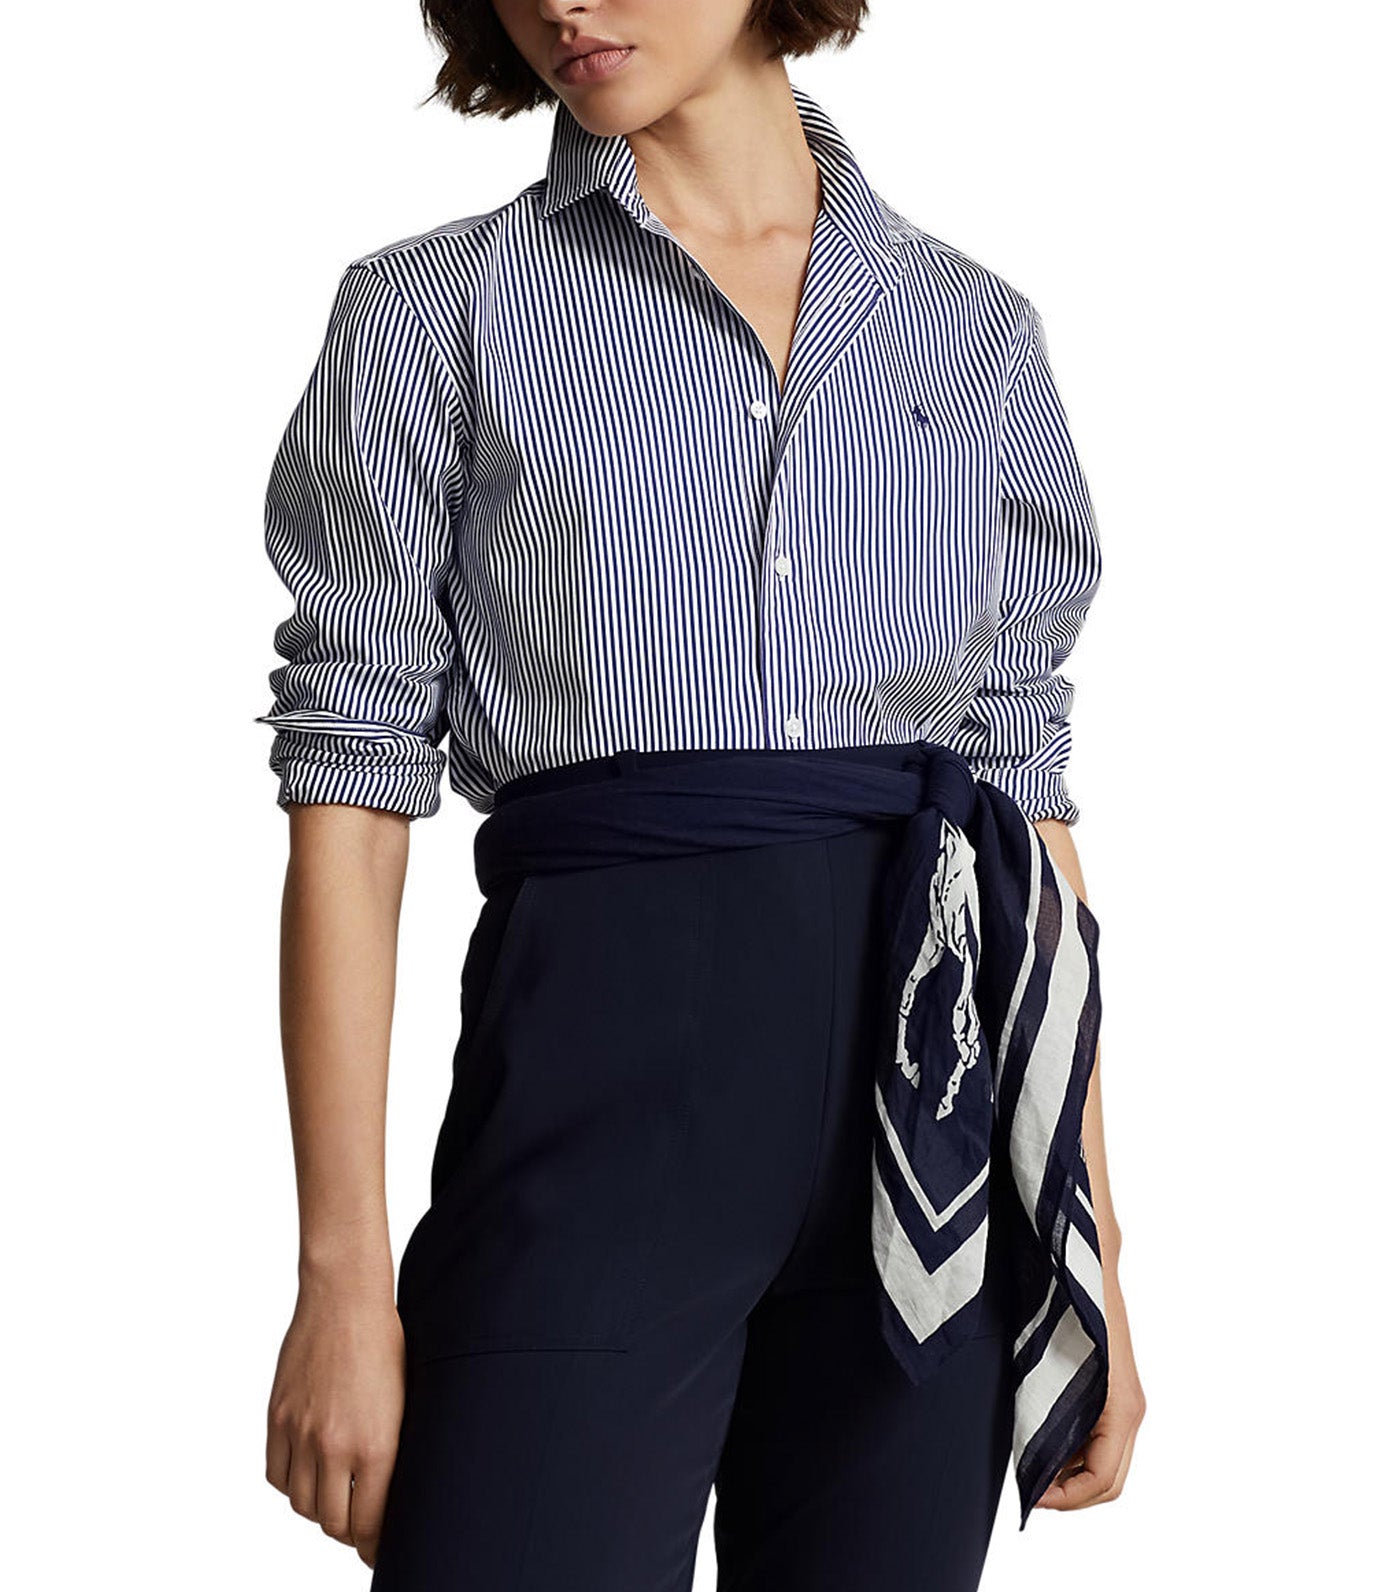 Women's Classic Fit Striped Cotton Shirt White/Fall Royal